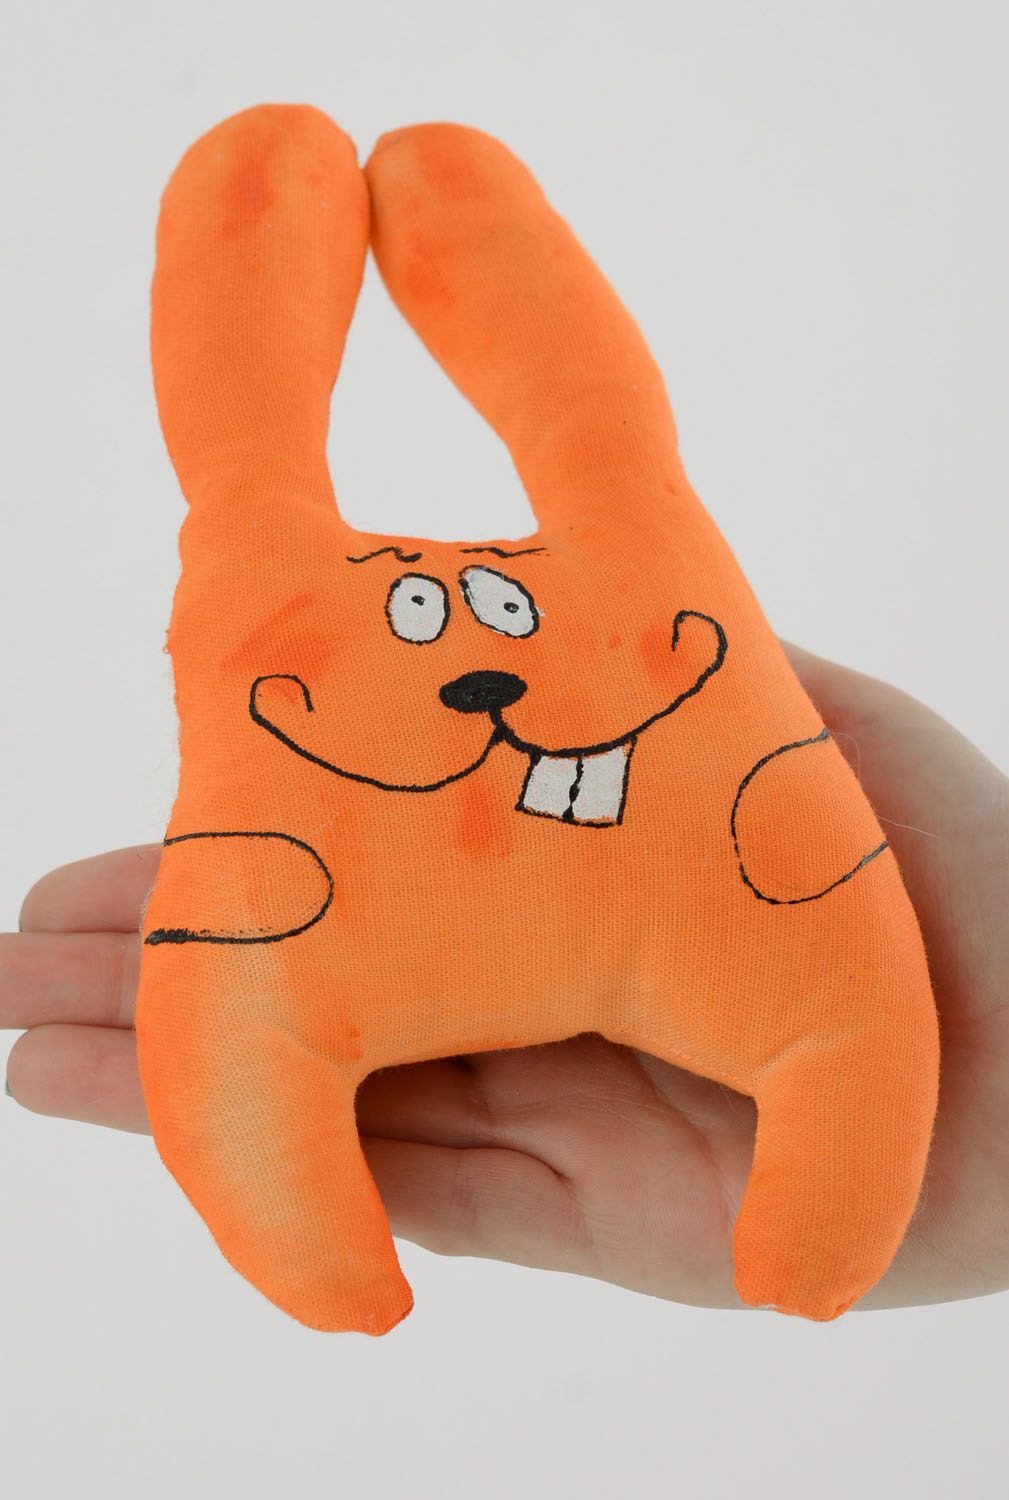 Coarse calico soft toy Orange Hare photo 4